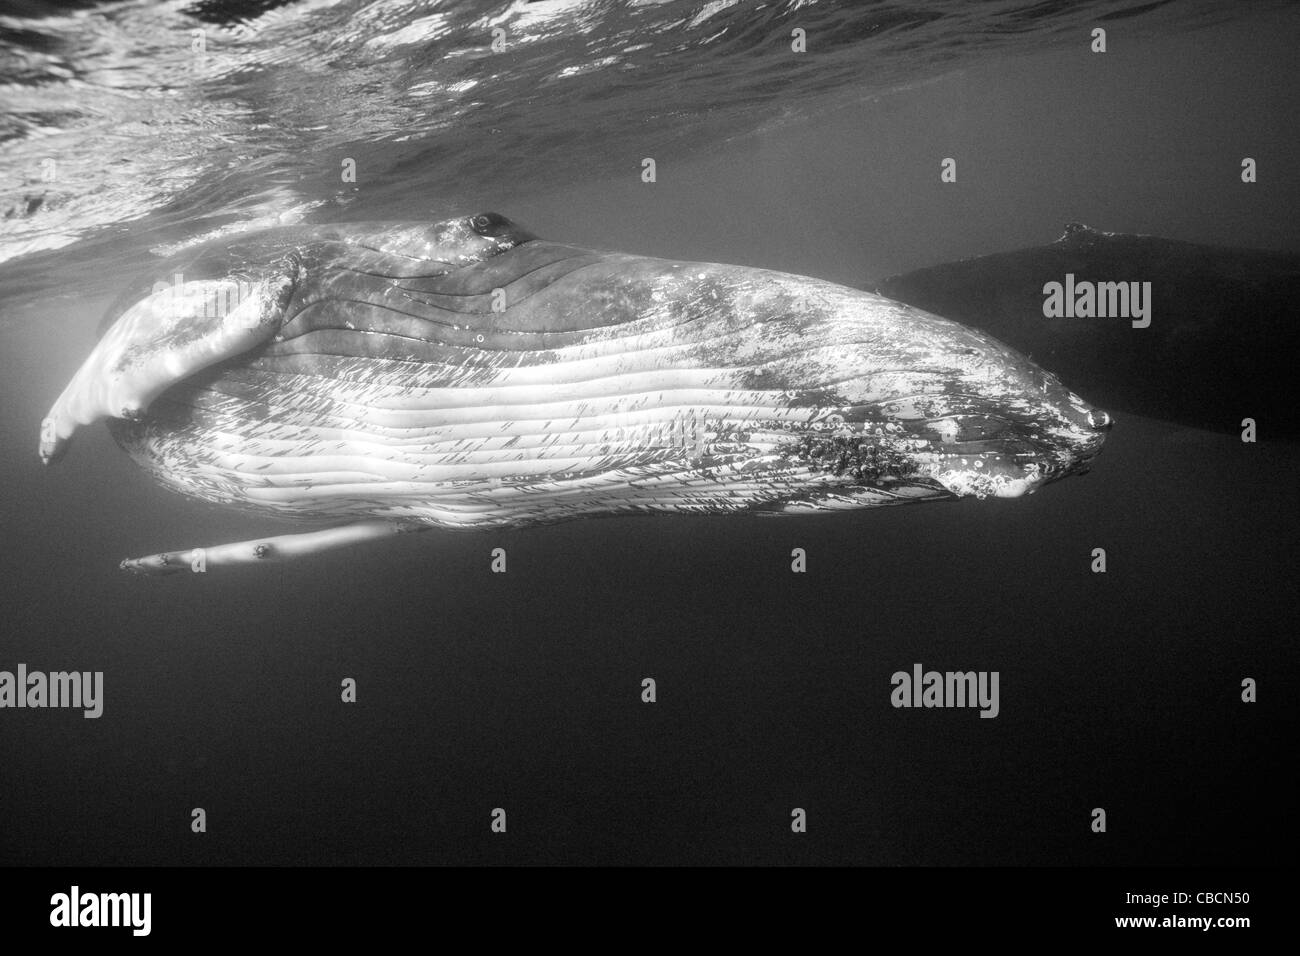 Humpback Whale, Megaptera novaeangliae, Silver Bank, Atlantic Ocean, Dominican Republic Stock Photo